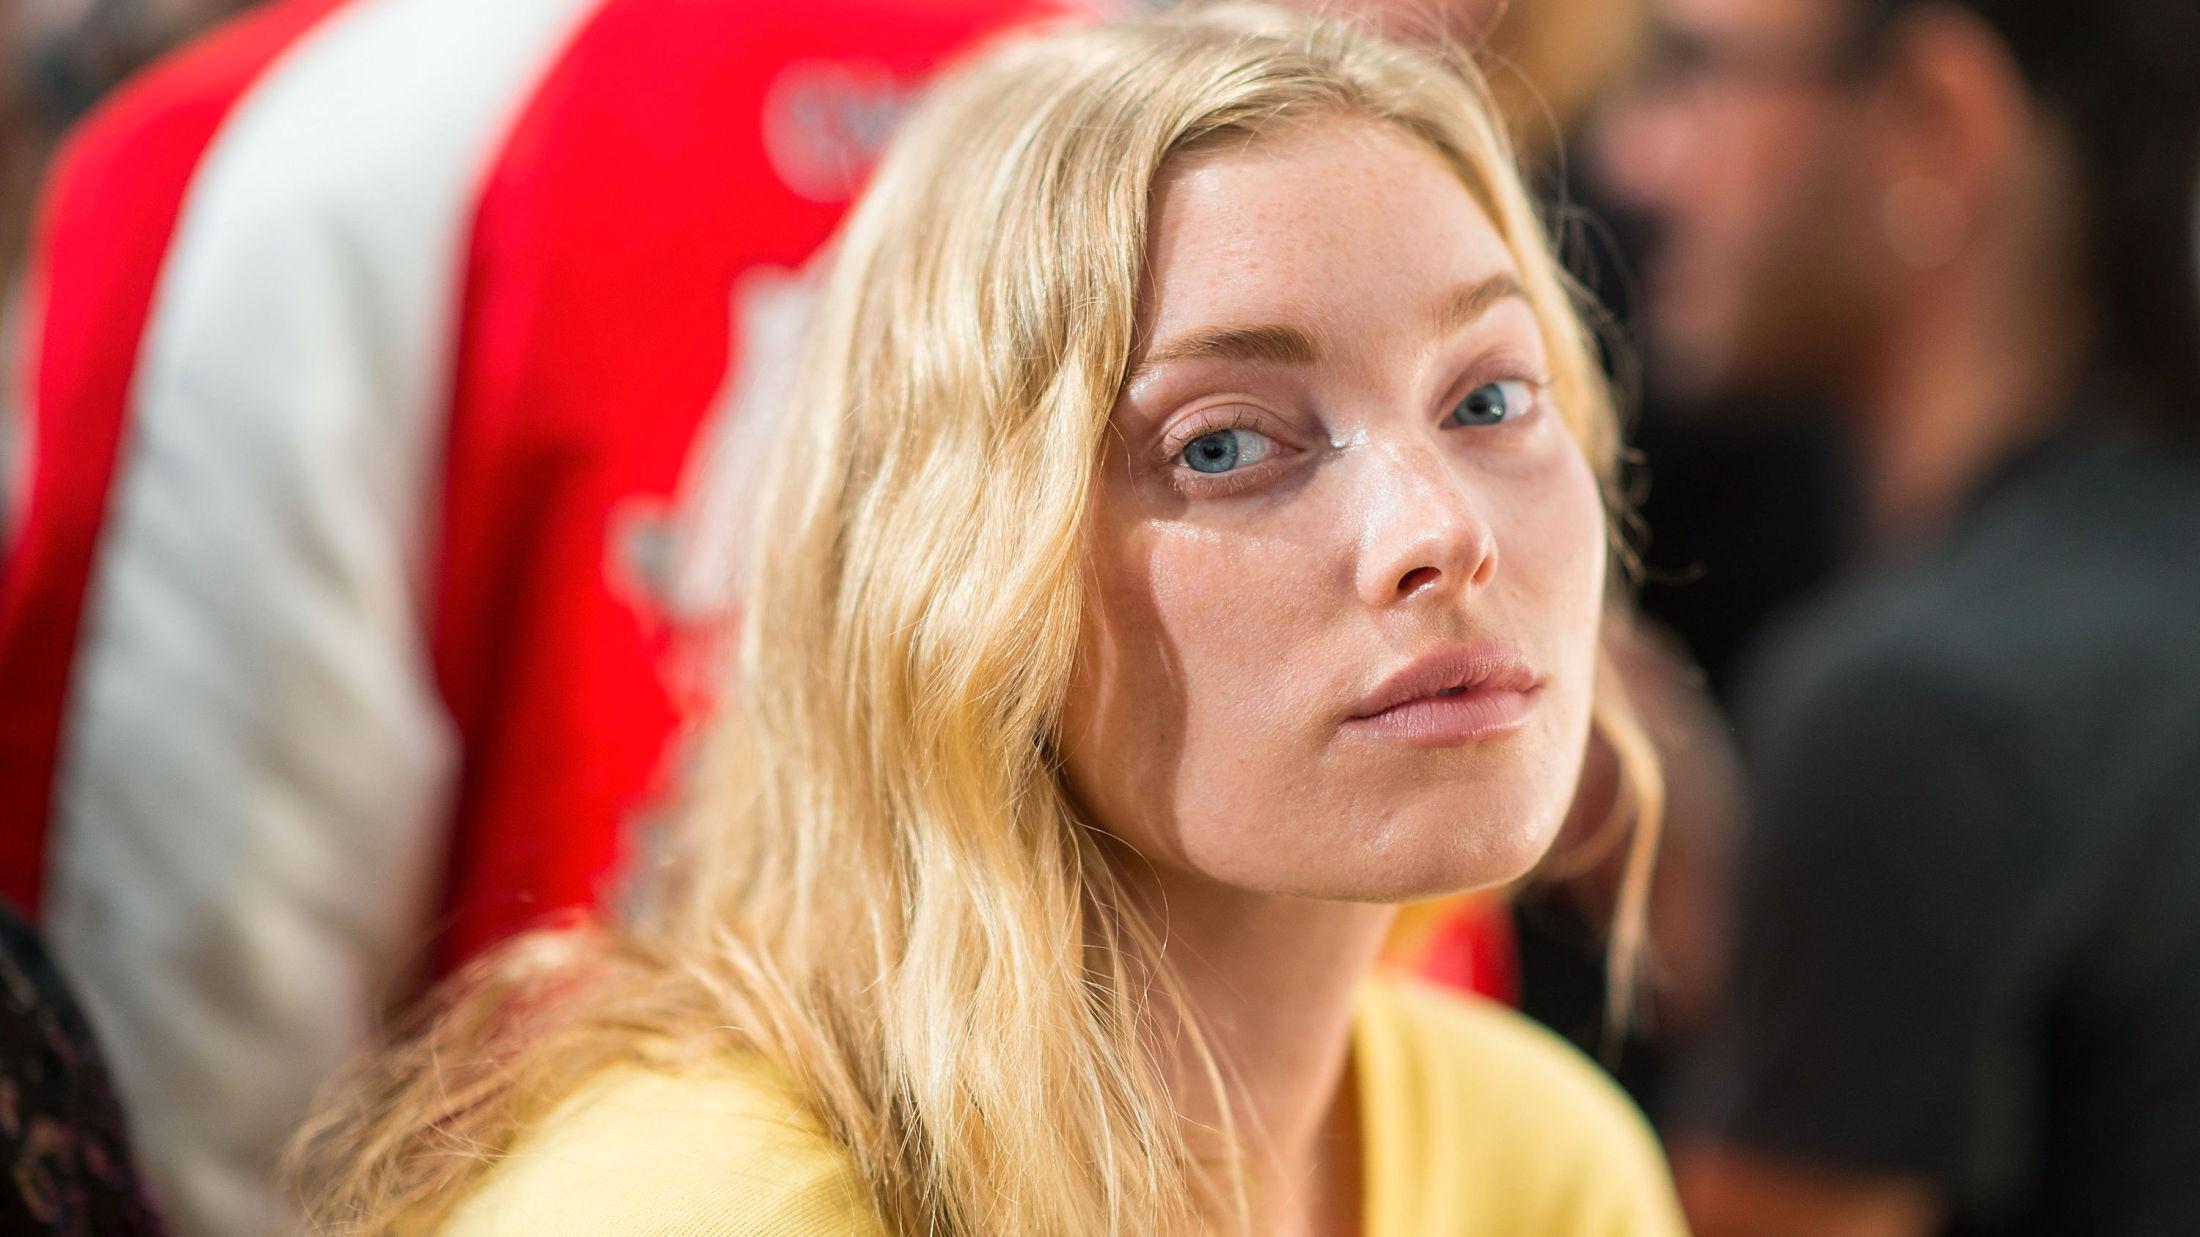 TRENDY MED FREGNER: Supermodell Elsa Hosk har naturlige fregner spredt rundt i hele ansiktet. Her under New York Fashion Week tidligere i år. Foto: Getty Images